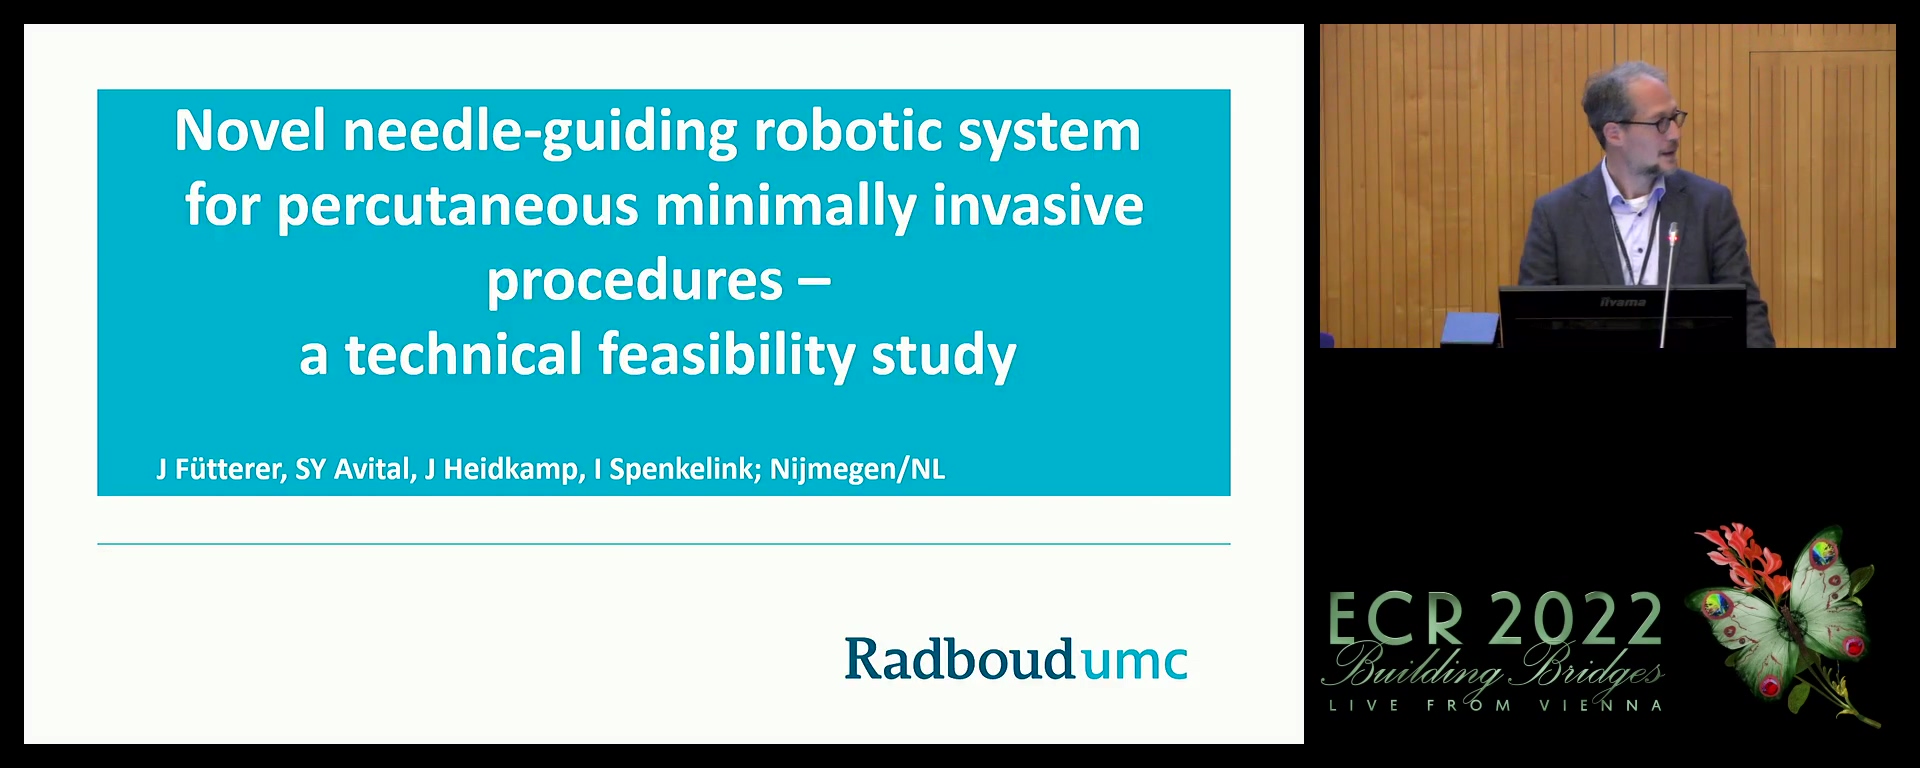 Novel needle-guiding robotic system for percutaneous minimally invasive procedures: a technical feasibility study - Jurgen J. Futterer, Nijmegen / NL